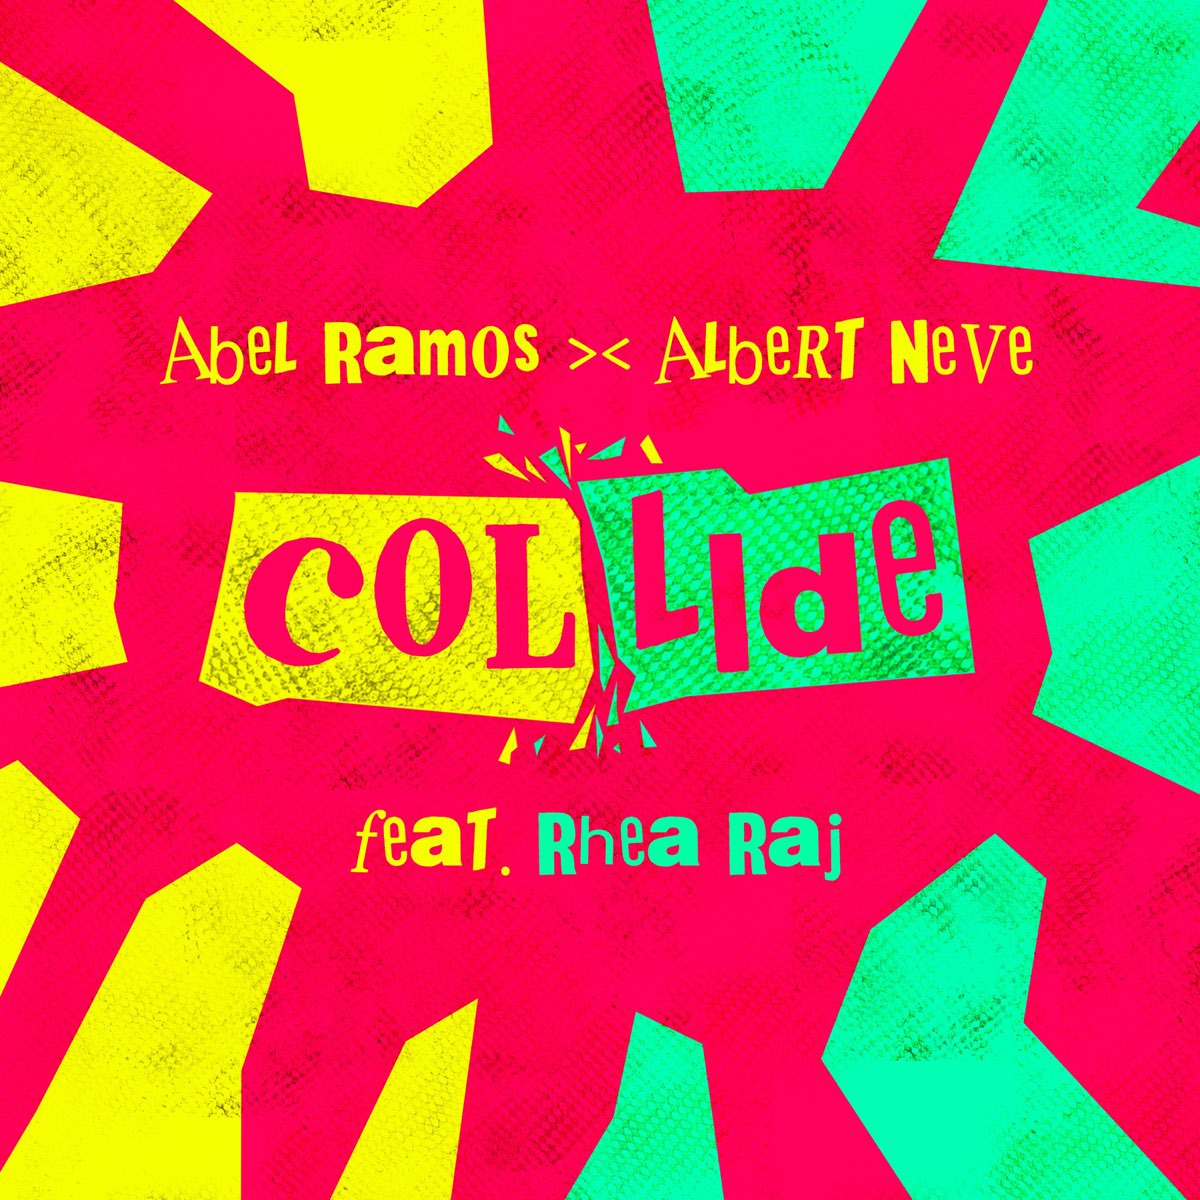 Collide (feat. Rhea Raj) - Single de Abel Ramos & Albert Neve en Apple Music